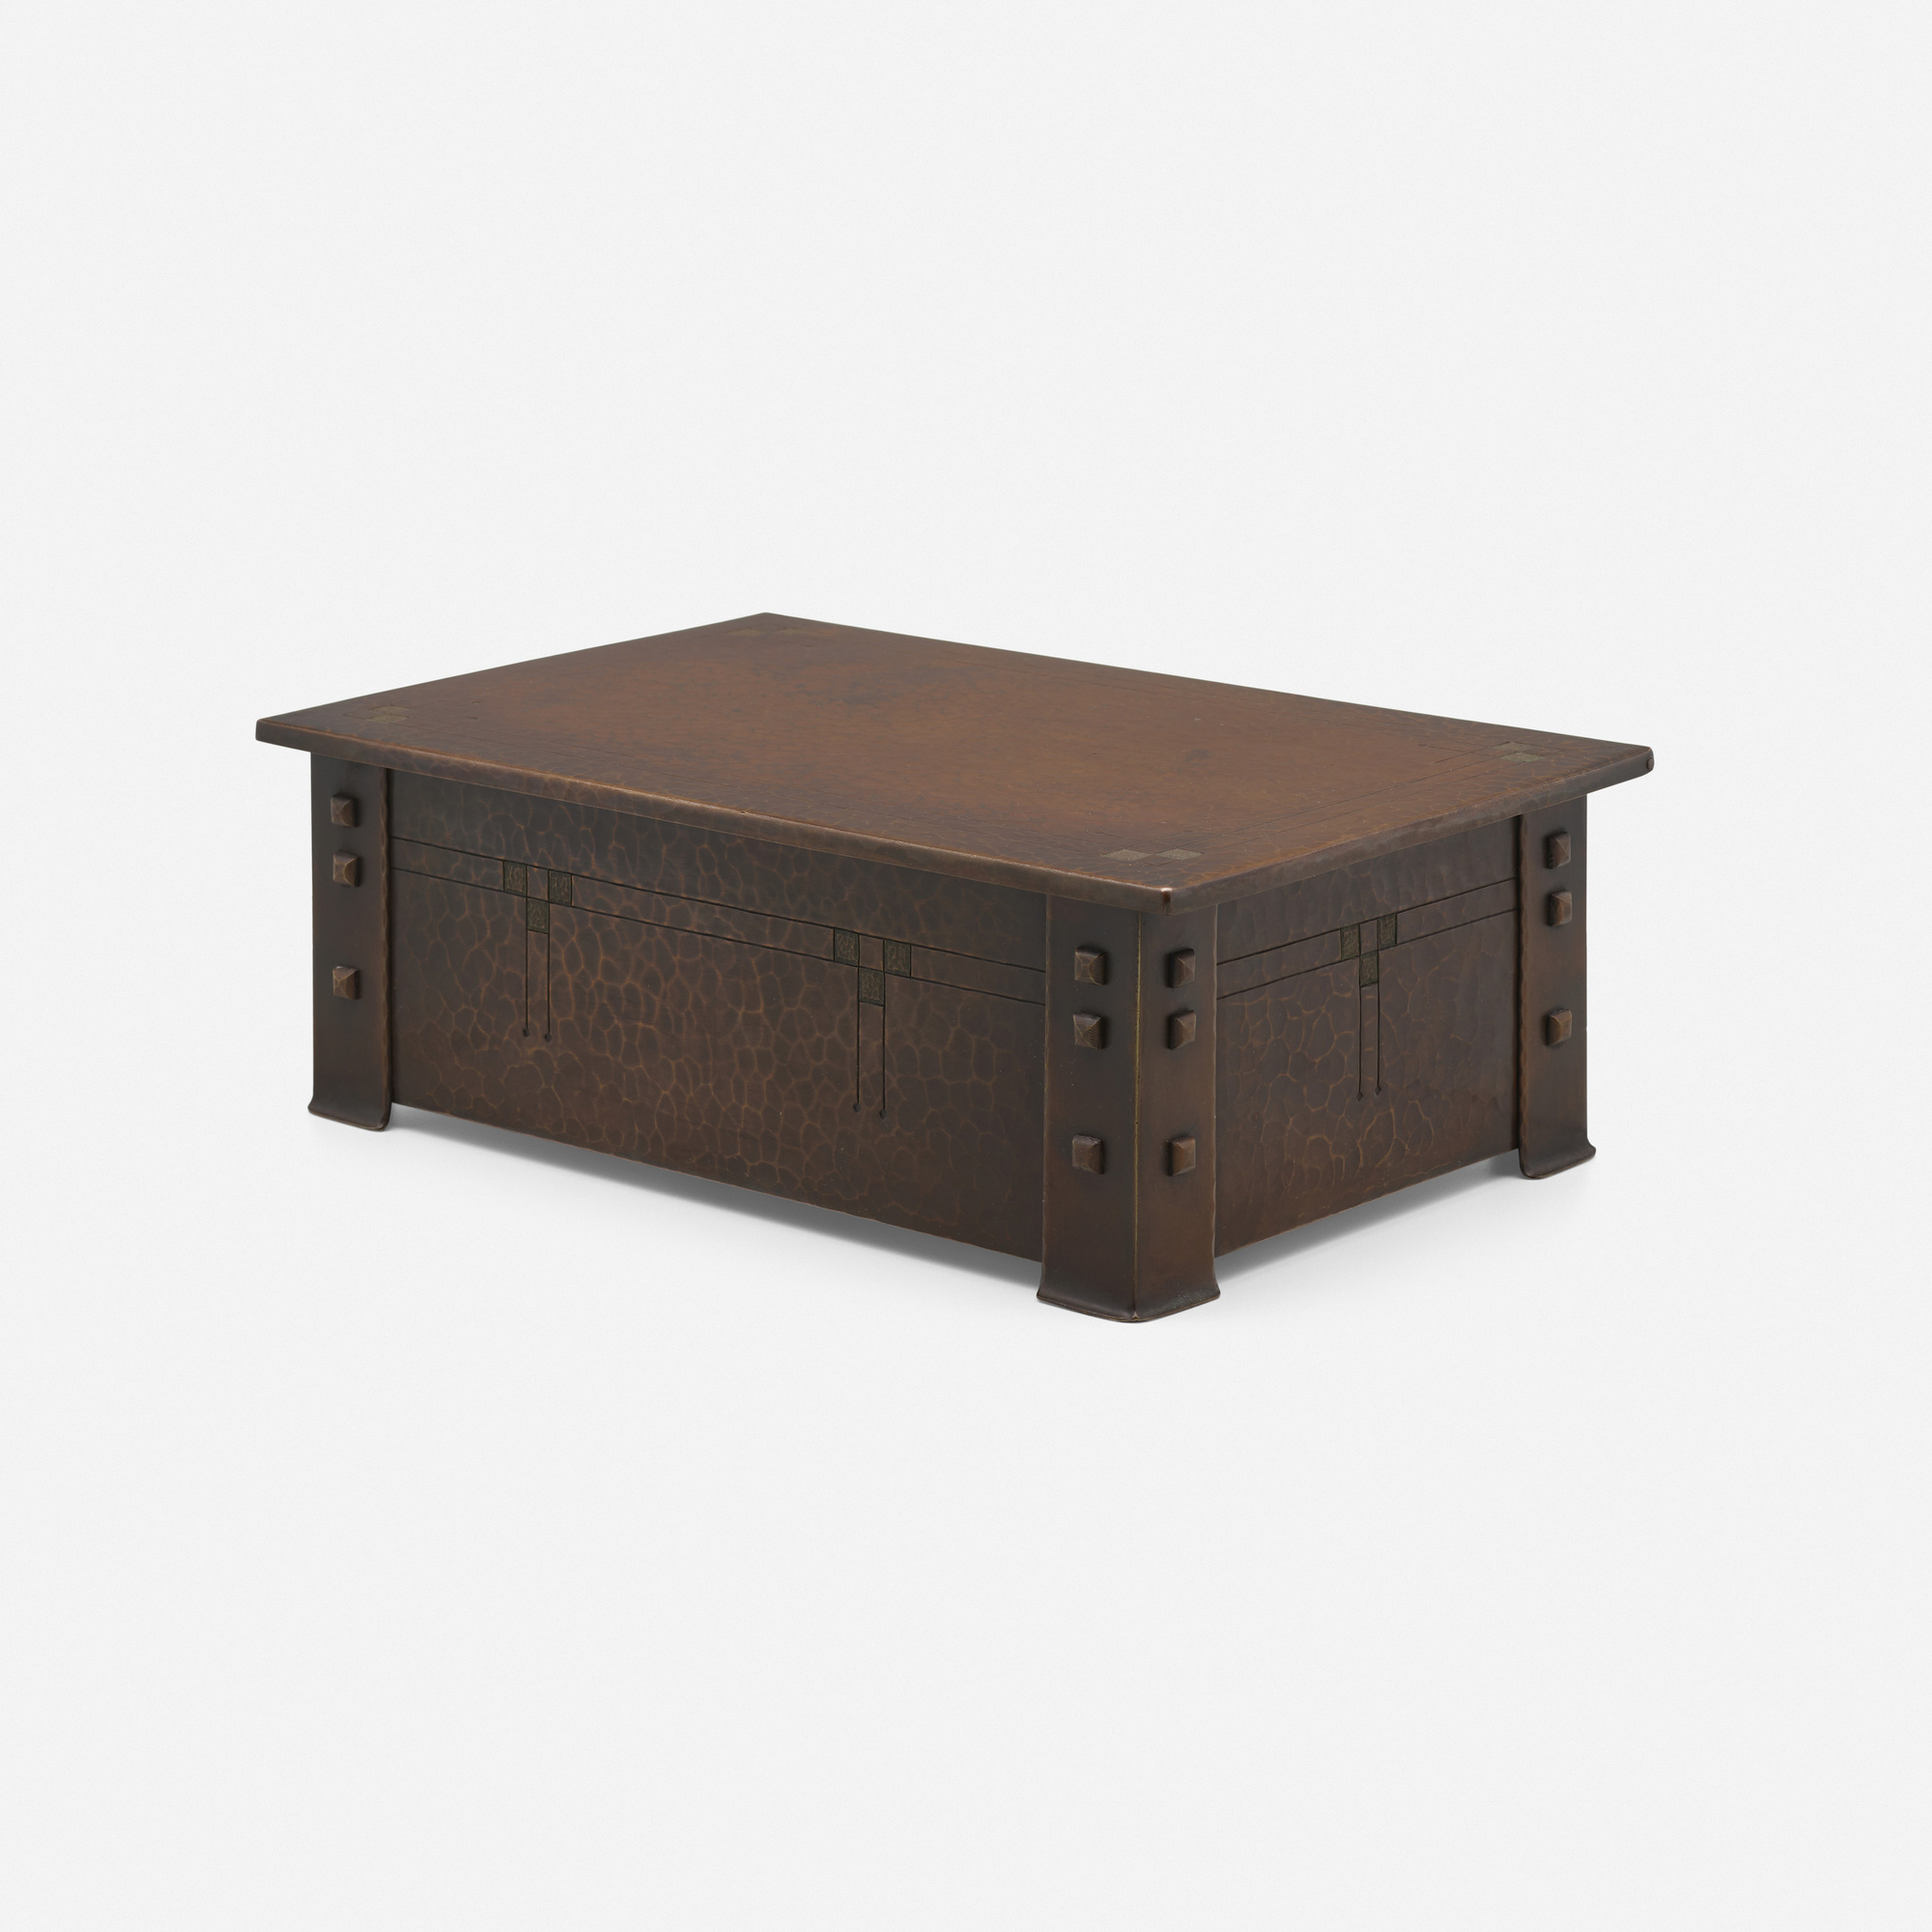 194: ROYCROFT, Rare lidded box < Early 20th Century Design, 2 